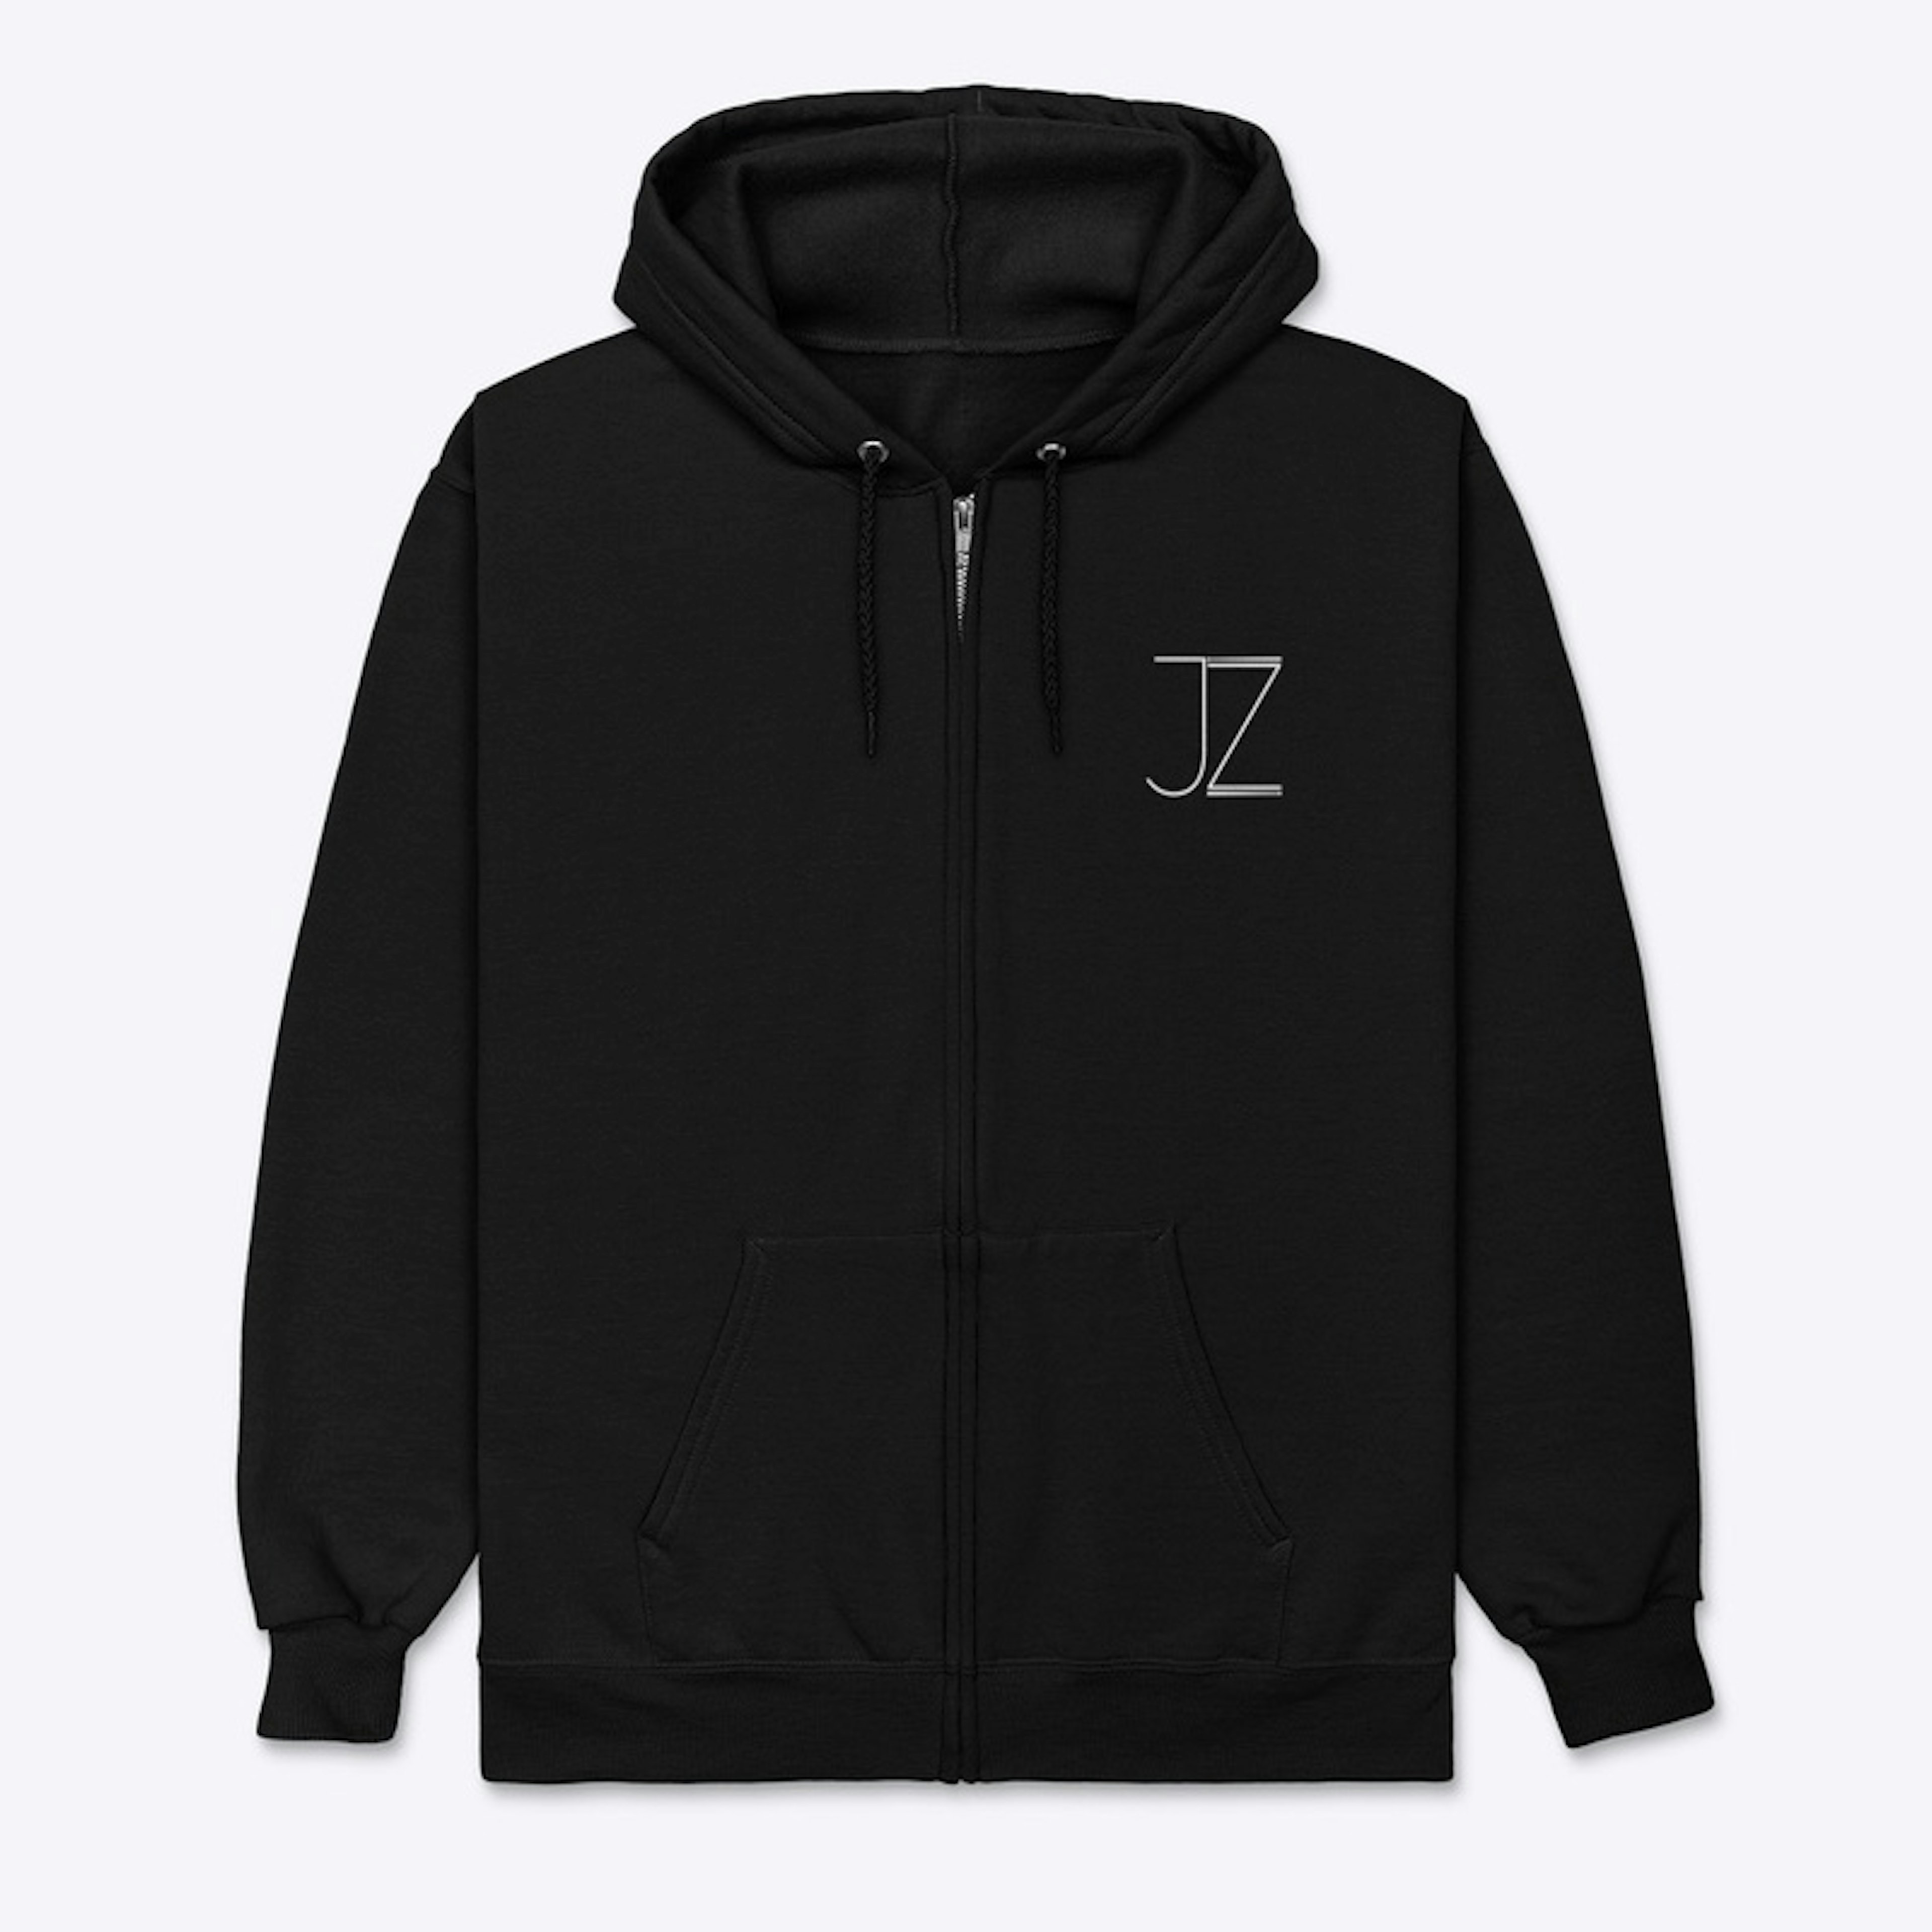 JZ Logo Zip Up Hoodie Black